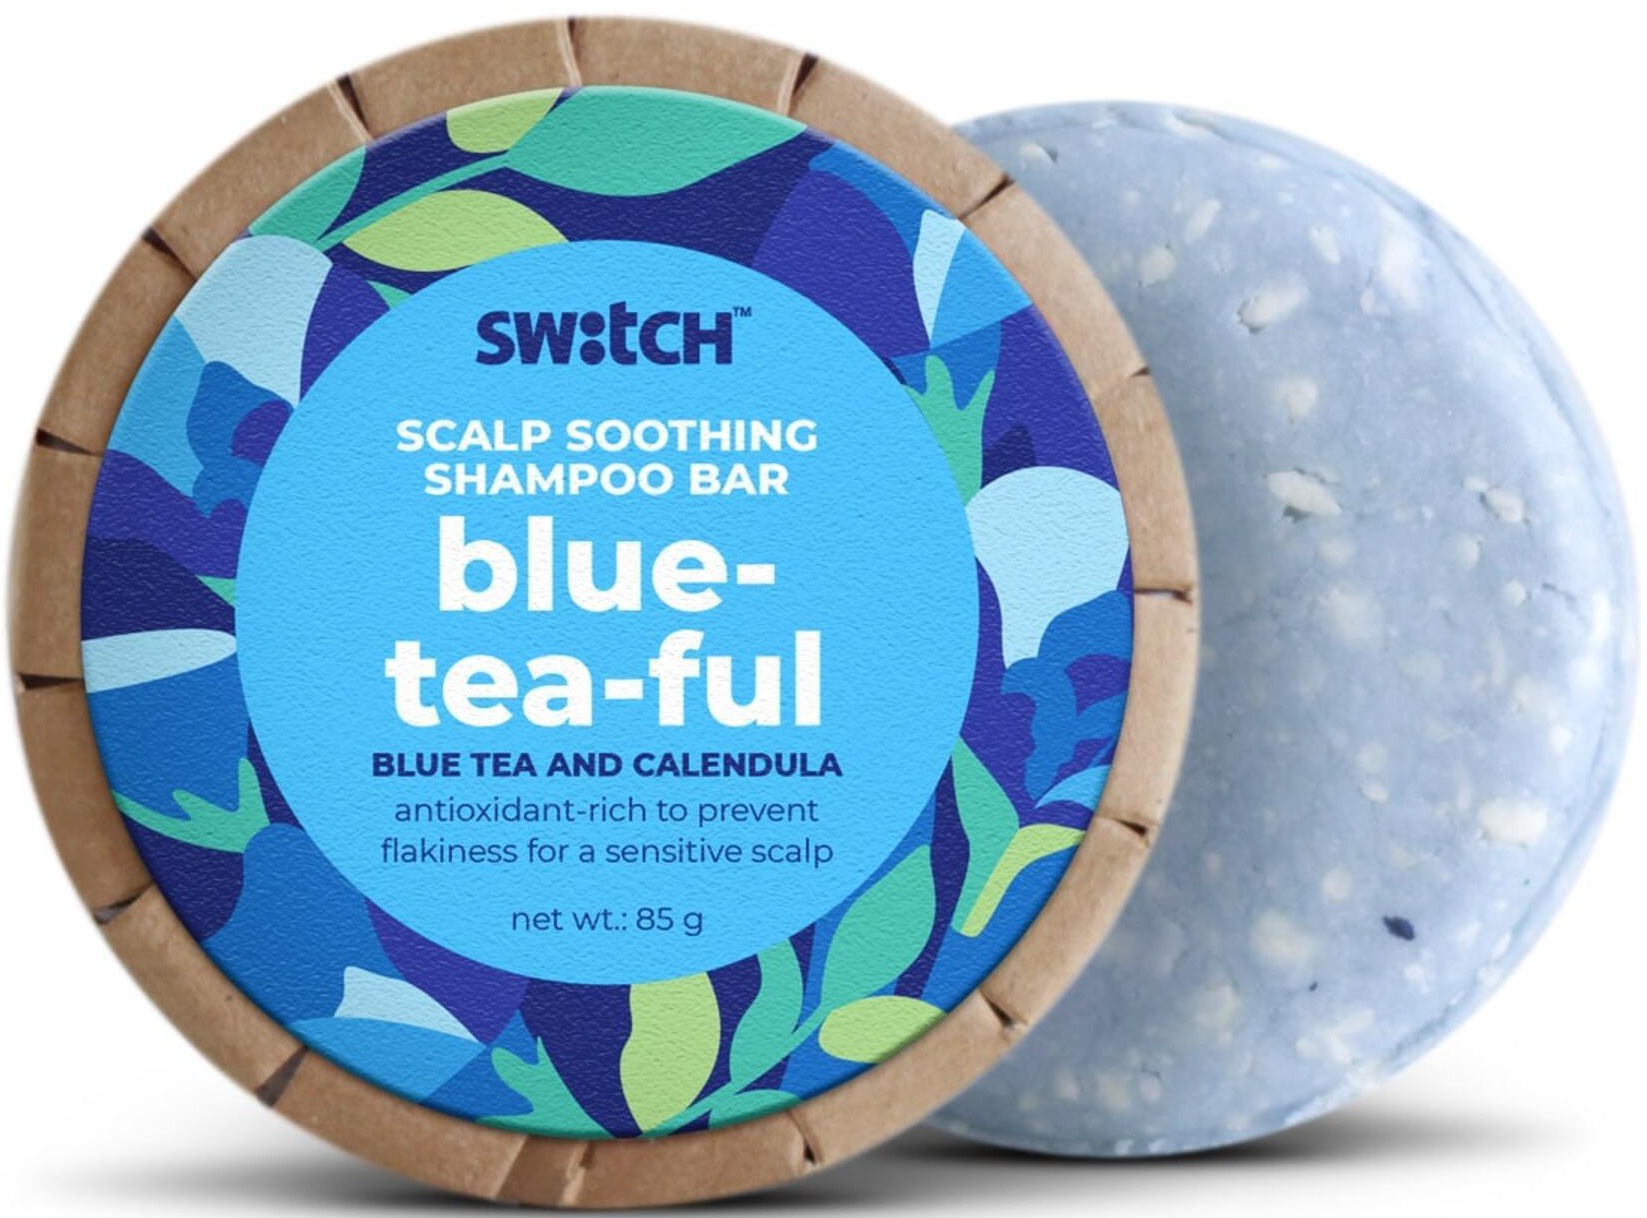 Switch Scalp Soothing Shampoo Bar Blue-tea-ful